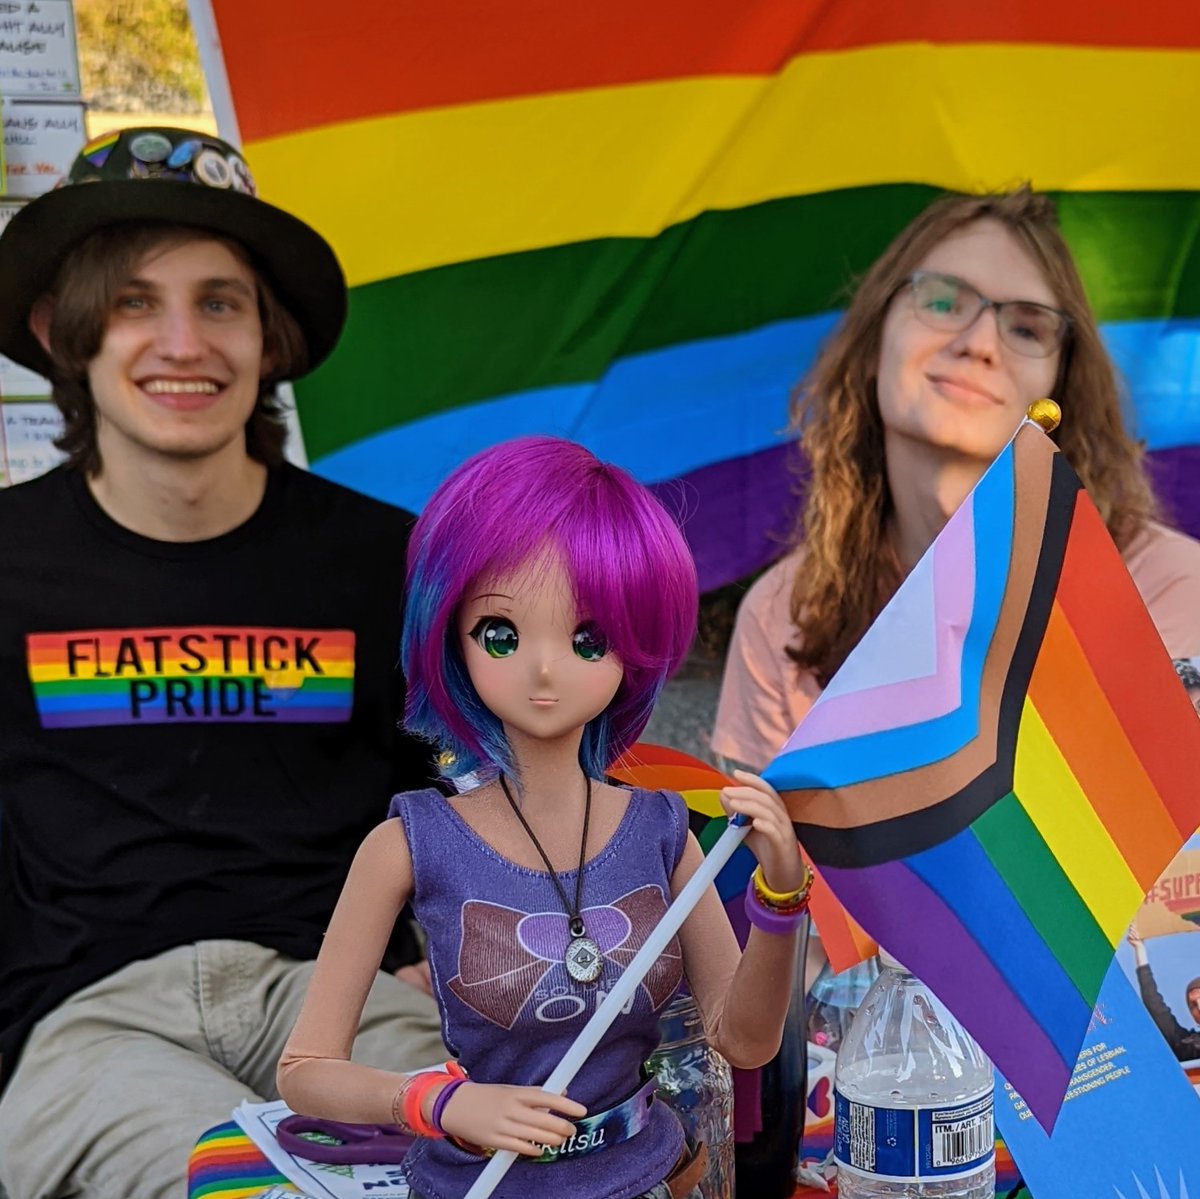 LGBTQ+ History Month! Vote for freedom to be who you are! / Kitsu with Noah & Drew at PFLAG booth, Issaquah Salmon Days 💜🏳️‍🌈 #Hypatia #Mirai #Fortoo #Kitsu #SmartDoll #BJD #Vote #PFLAG #lgbthistorymonth #lgbthistory #lgbtsupporter #rainbowflag #ProgressPrideFlag #LoveThyNeighbor